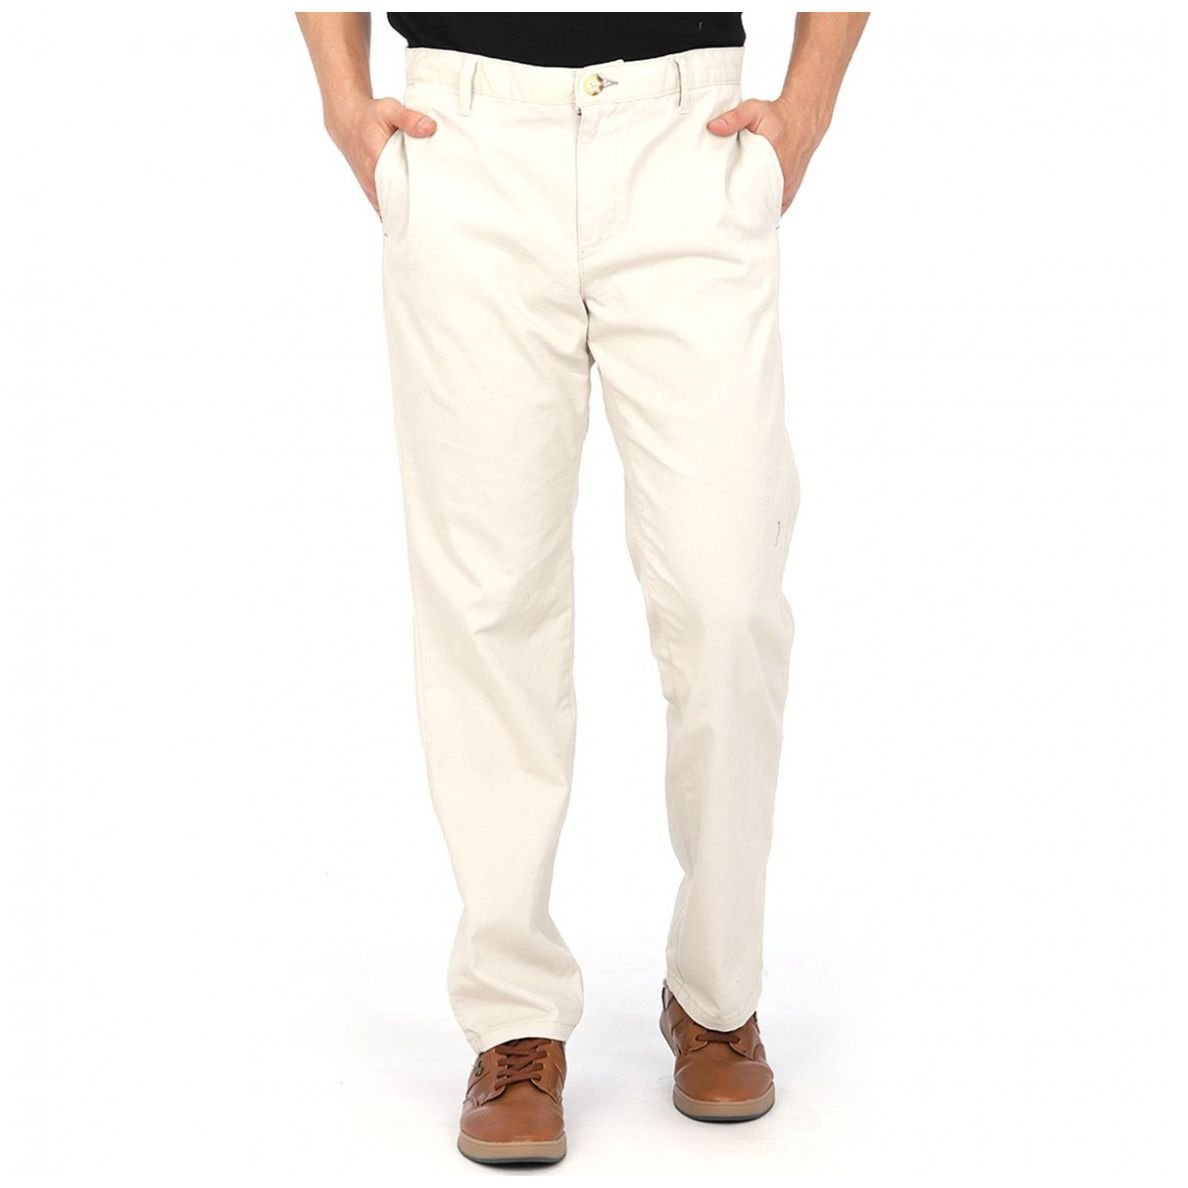 Pantalon Blanco Para Hombre Gabardina Yale